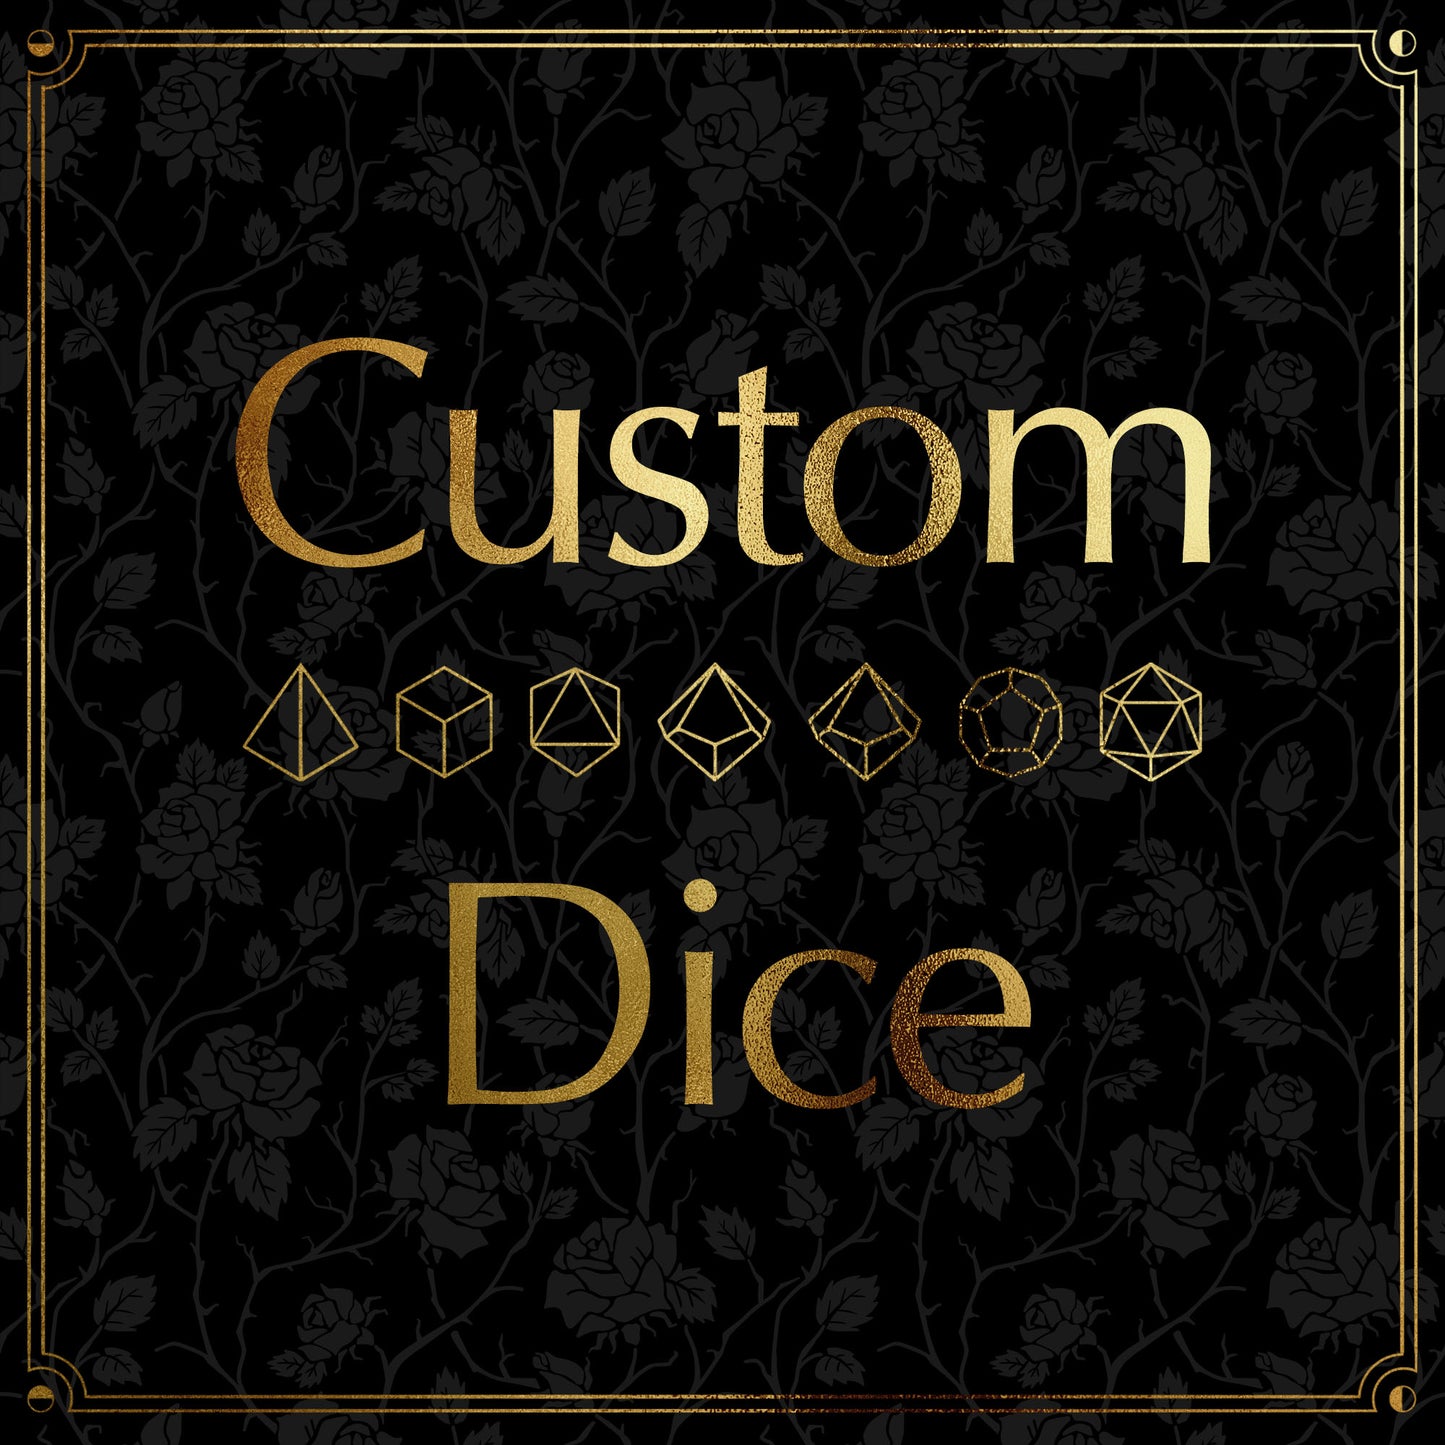 Custom Dice Wedding Dice - CrystalMaggie